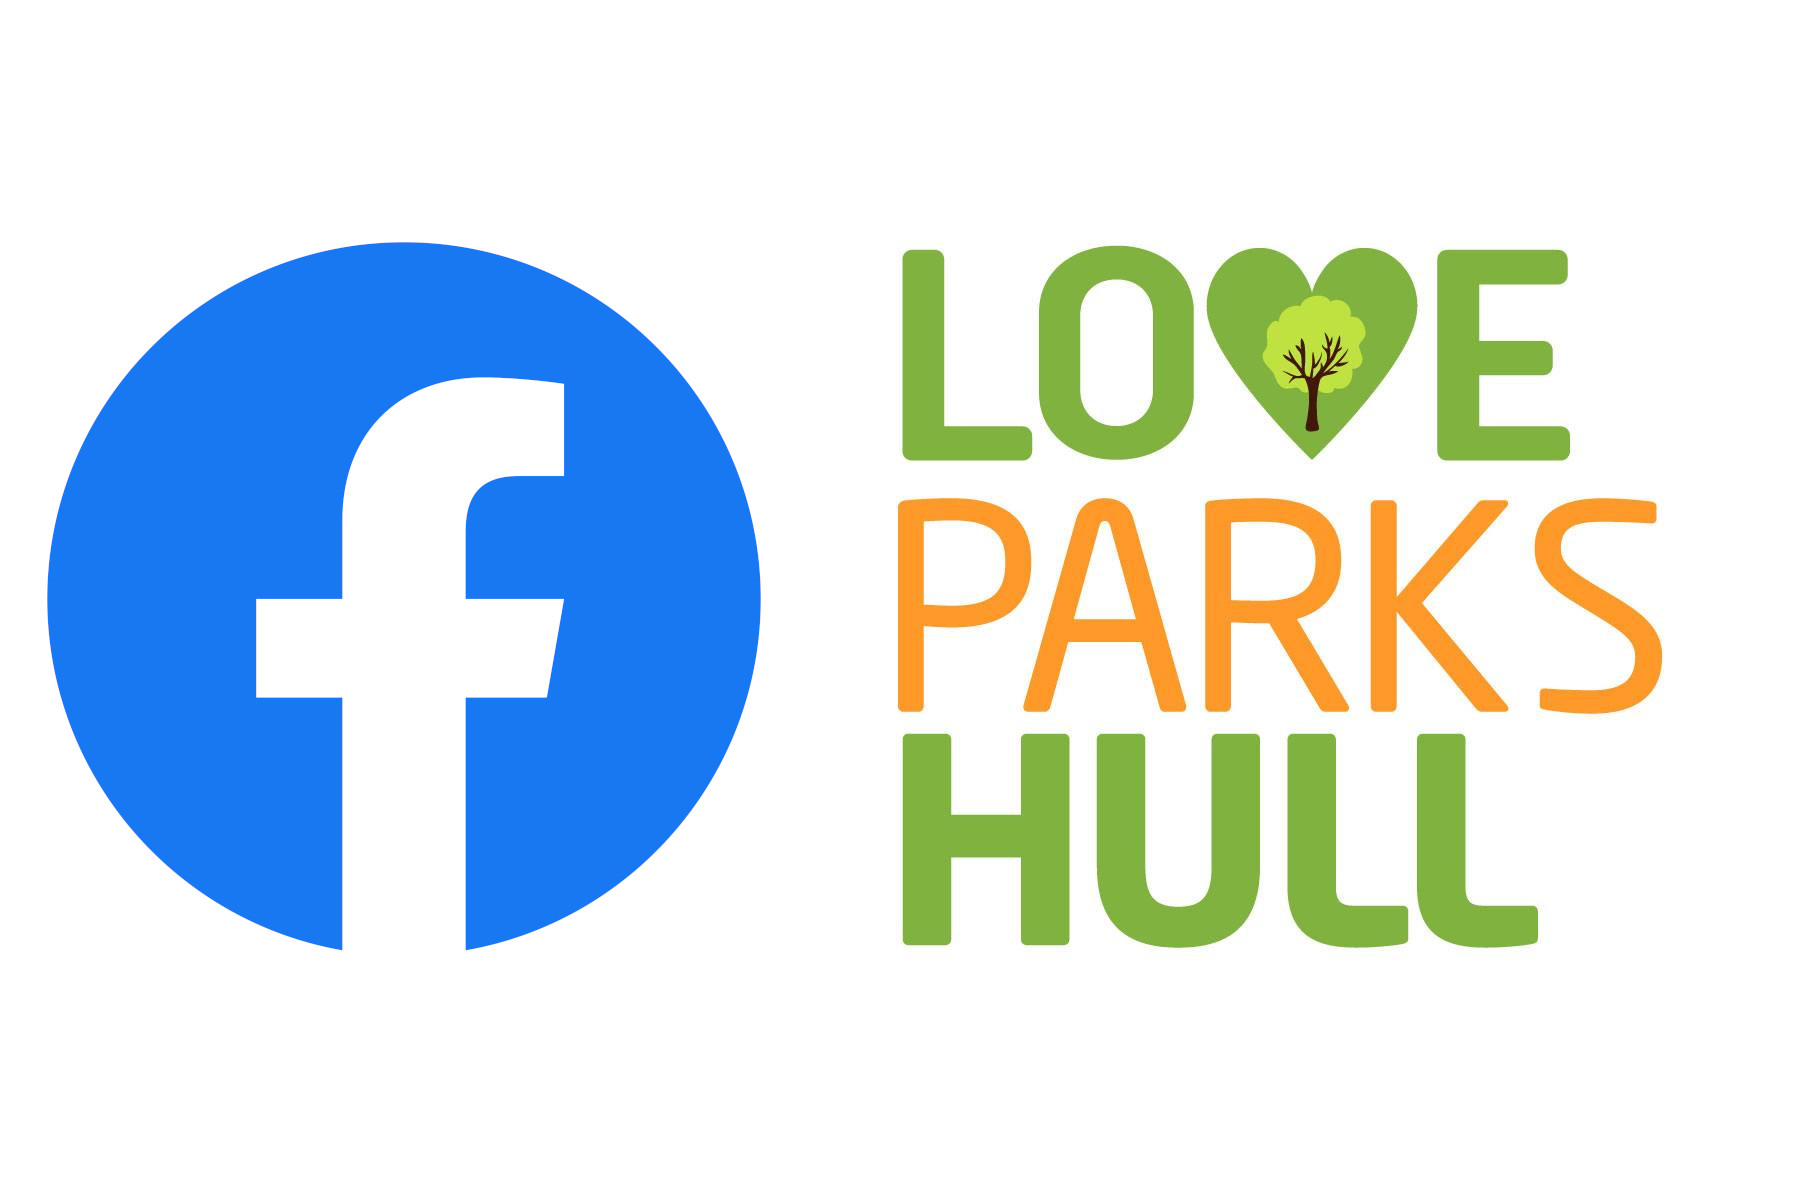 Love parks hull and Facebook logos